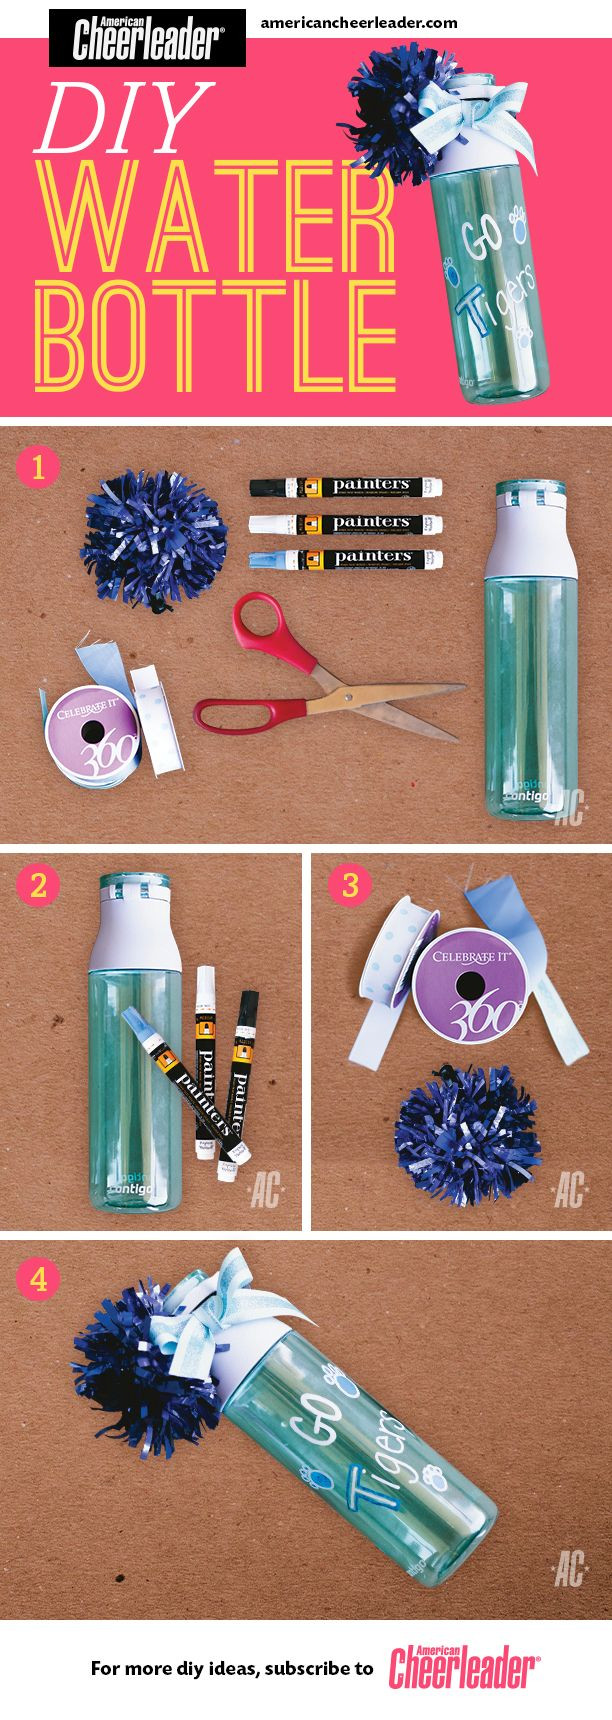 Best ideas about DIY Cheer Gifts
. Save or Pin De 20 bedste idéer inden for Cheerleading på Pinterest Now.